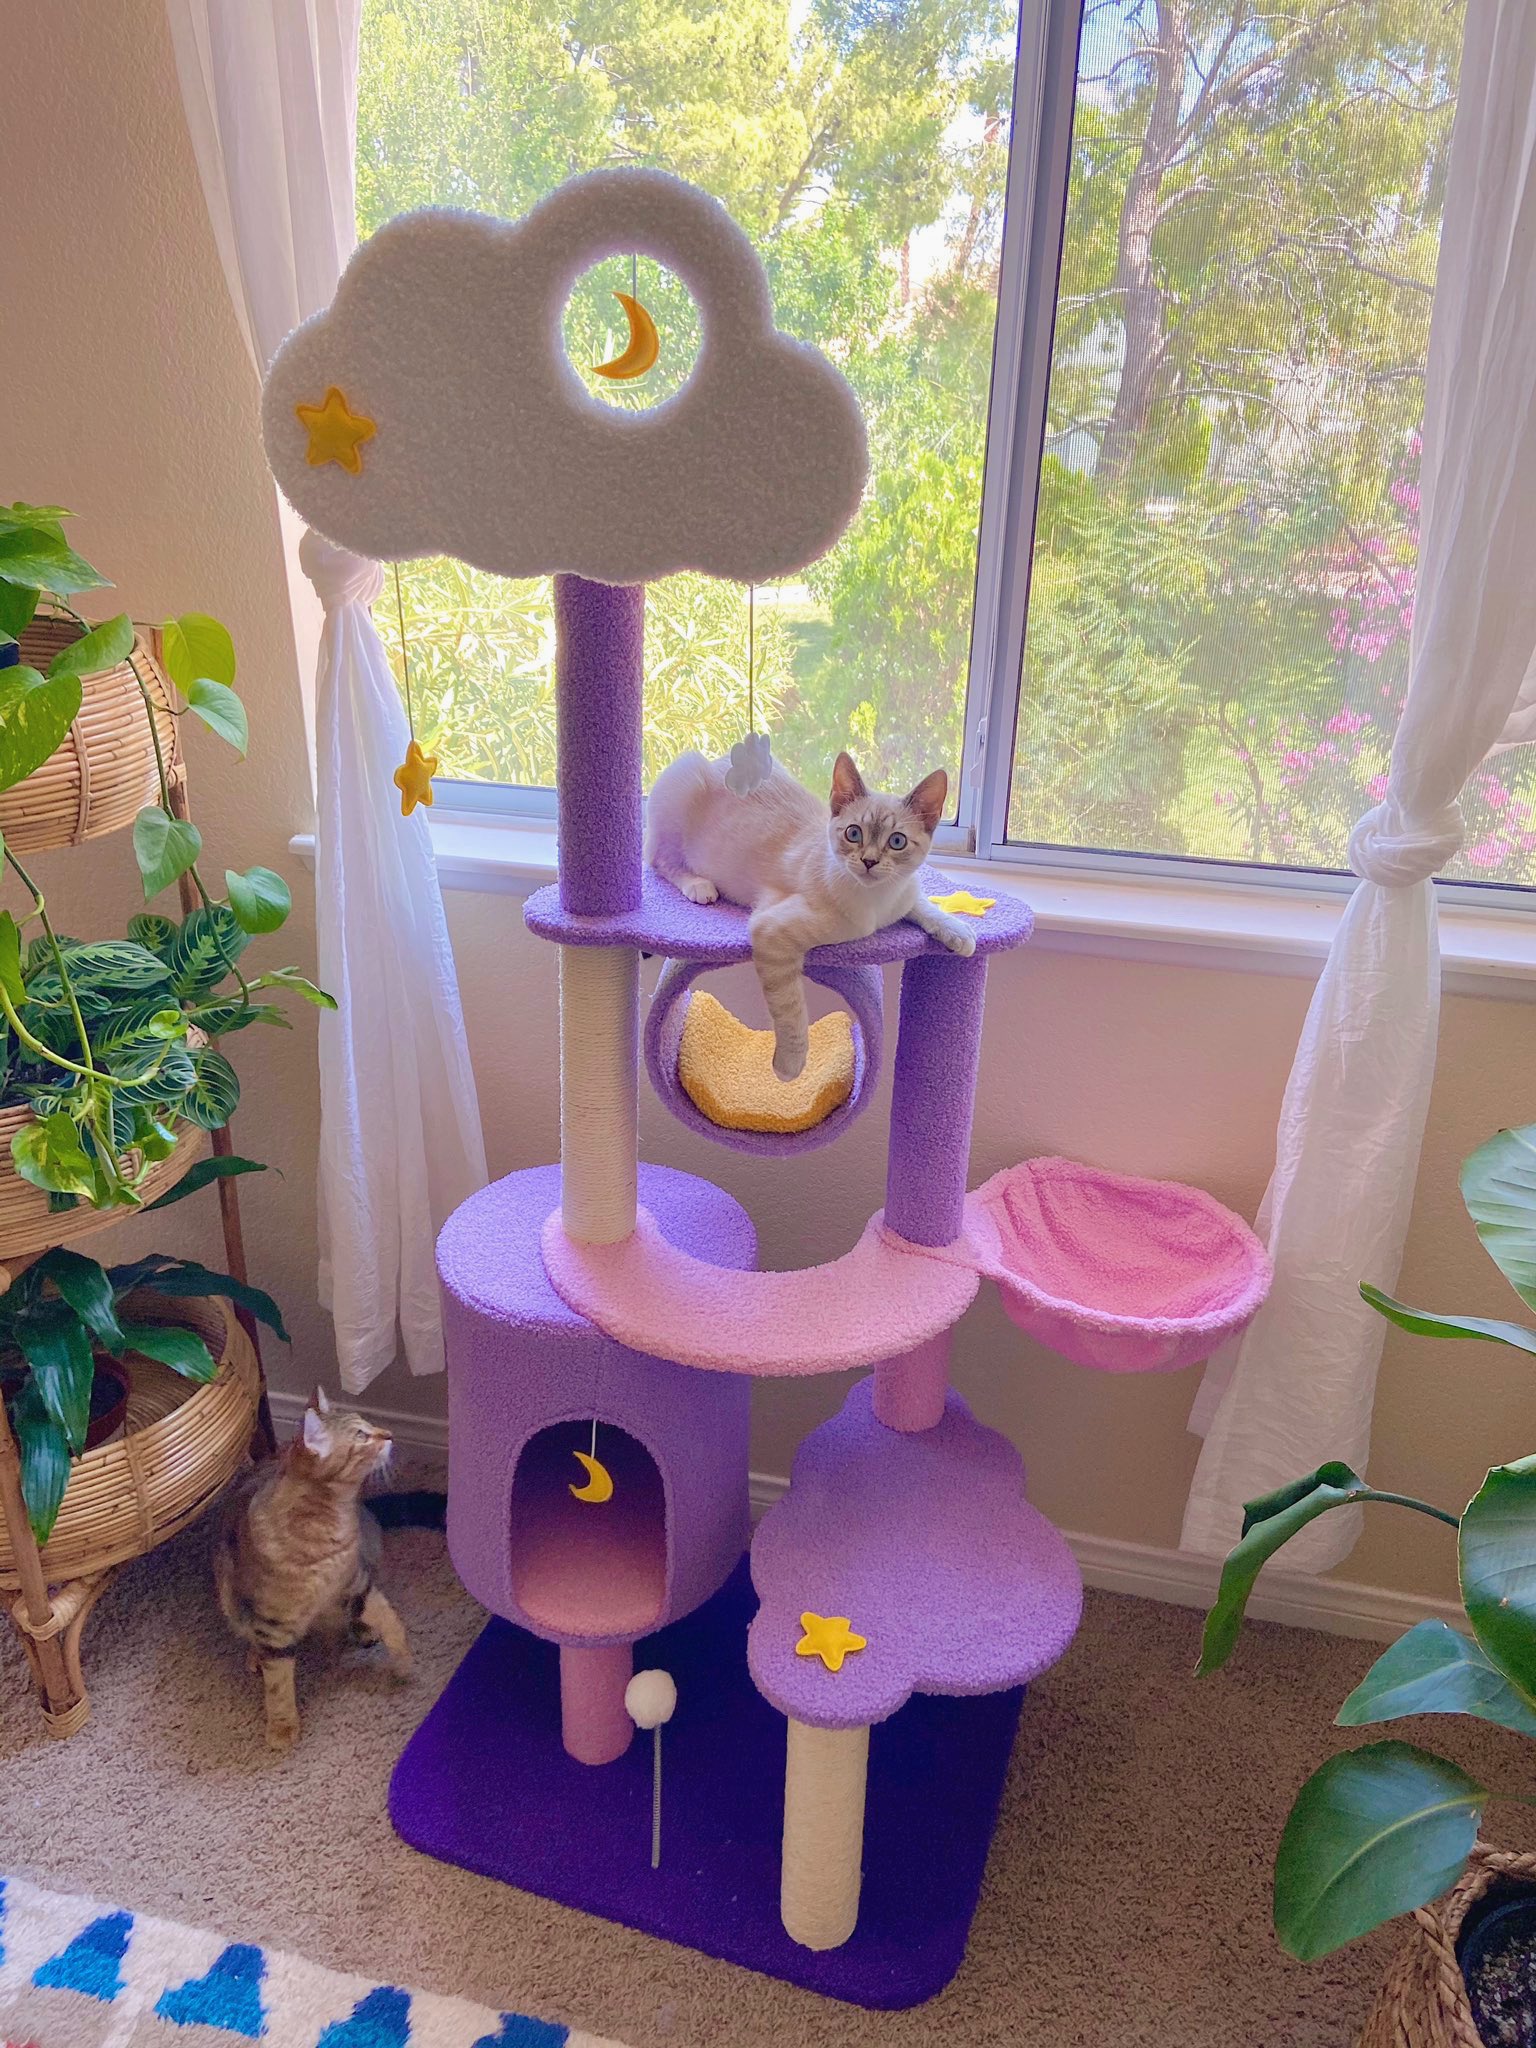 ˏˋ ciara ˎˊ˗ on X: "Look at this magical girl cat tree 🥺💕  https://t.co/8gdkomprfM" / X